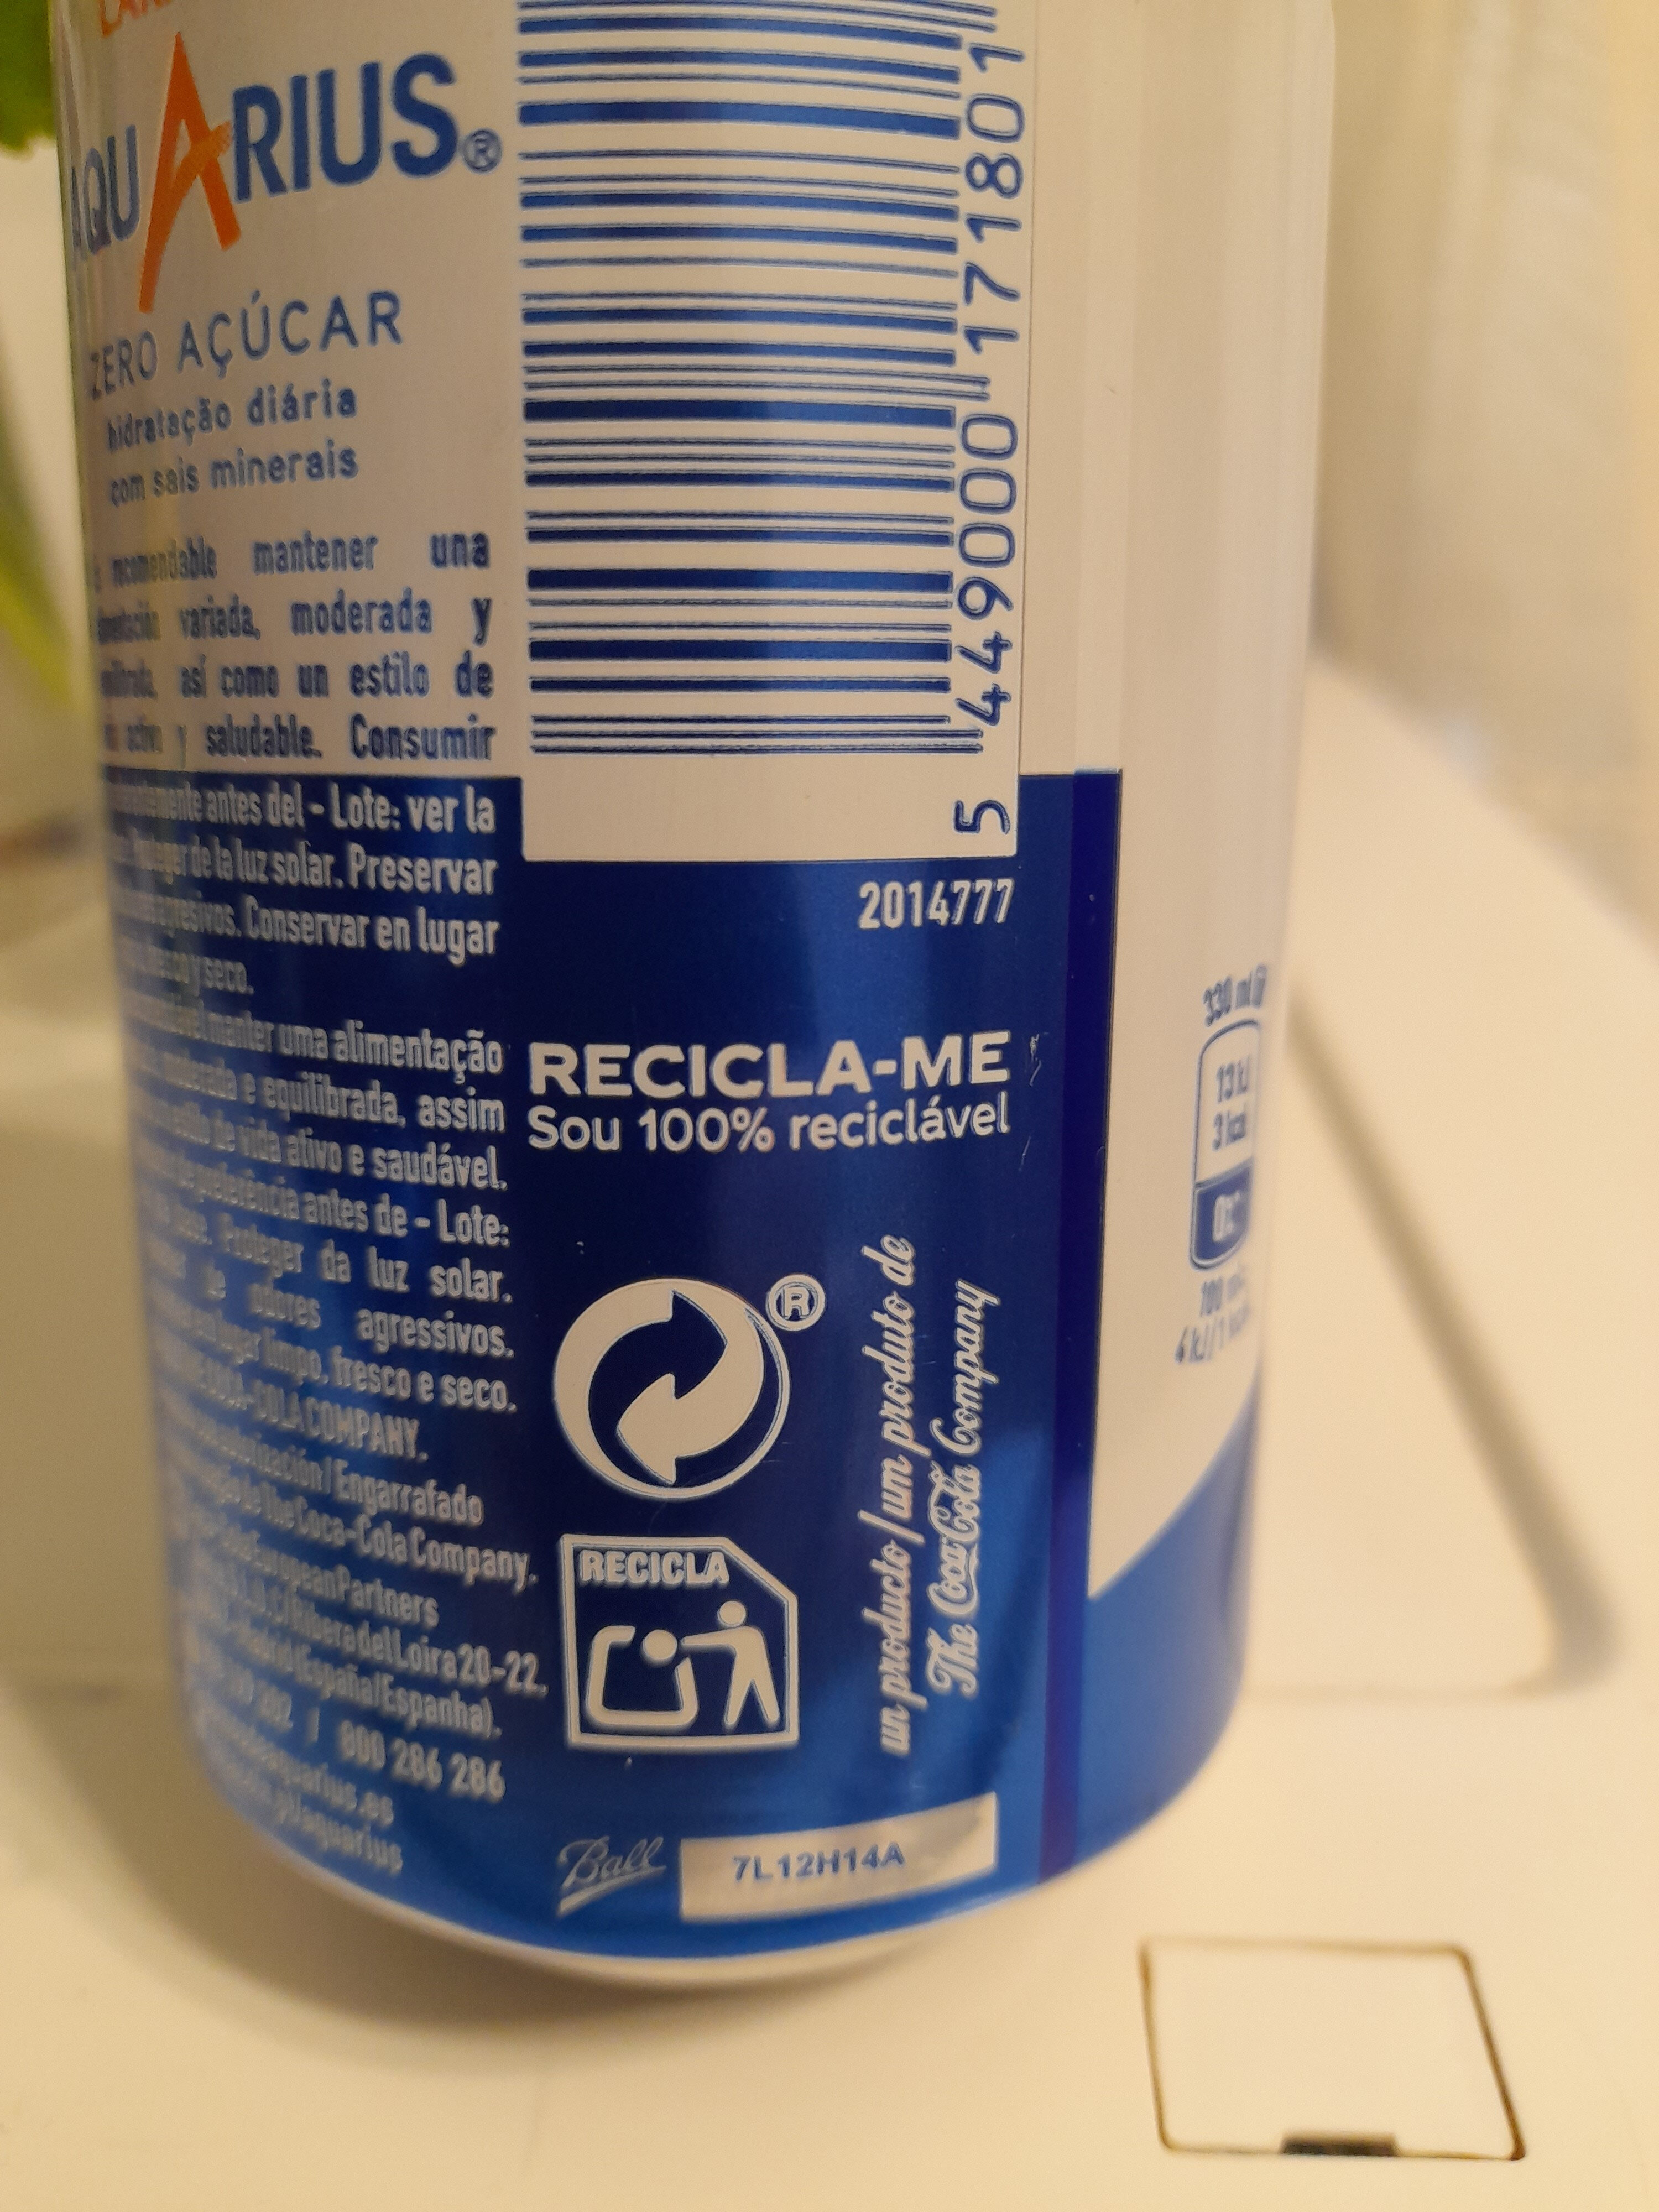 Aquarius Naranja - Recycling instructions and/or packaging information